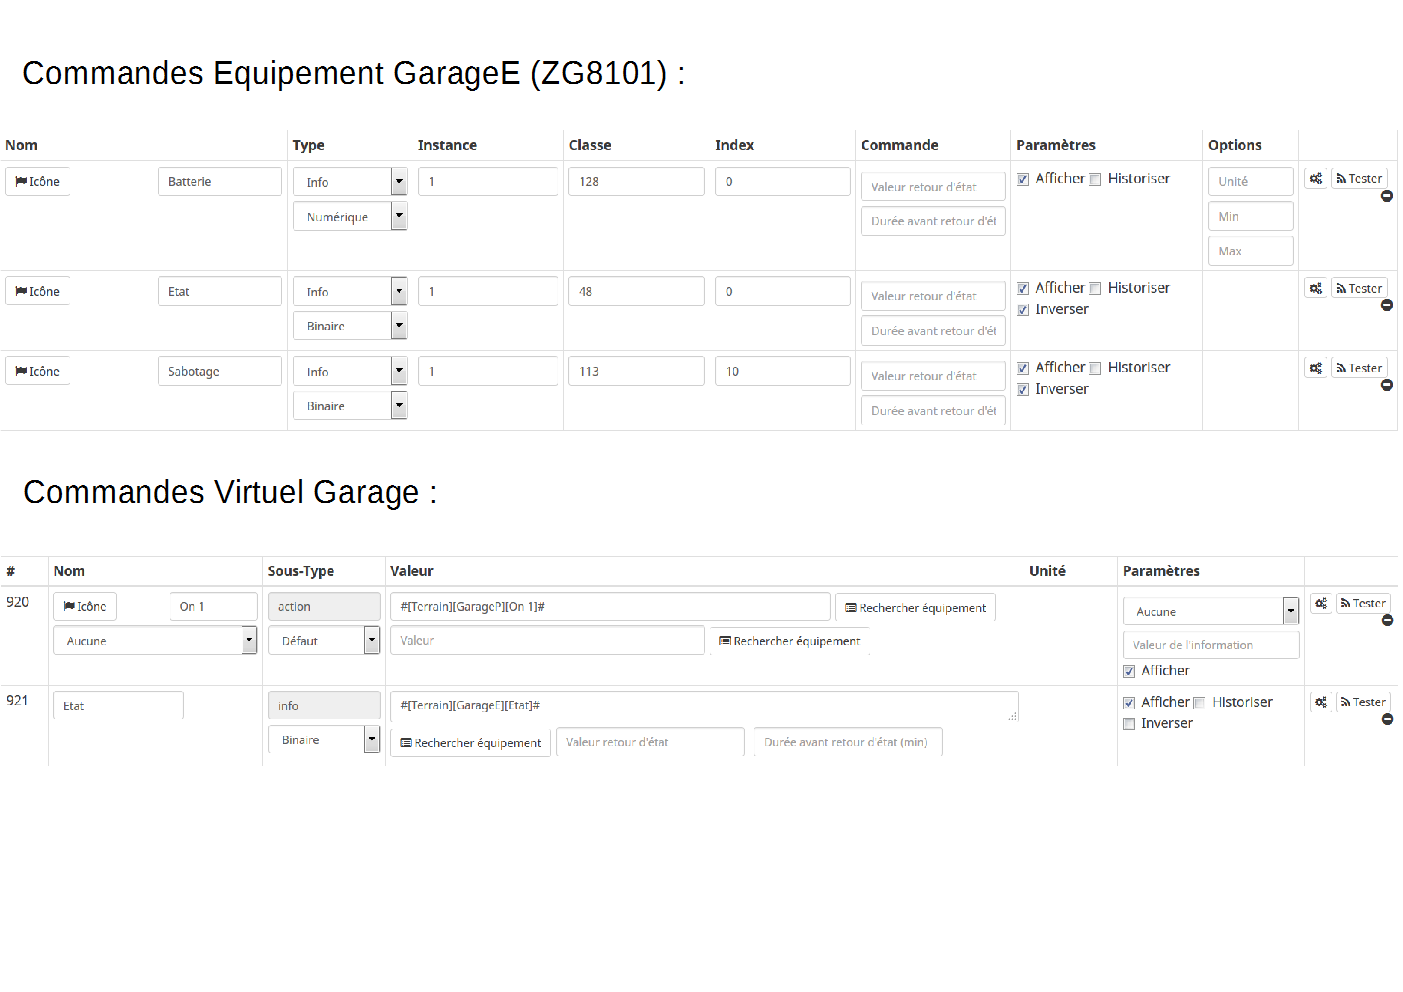 commandes-equipement-GarageP-et-virtuel-Garage.png